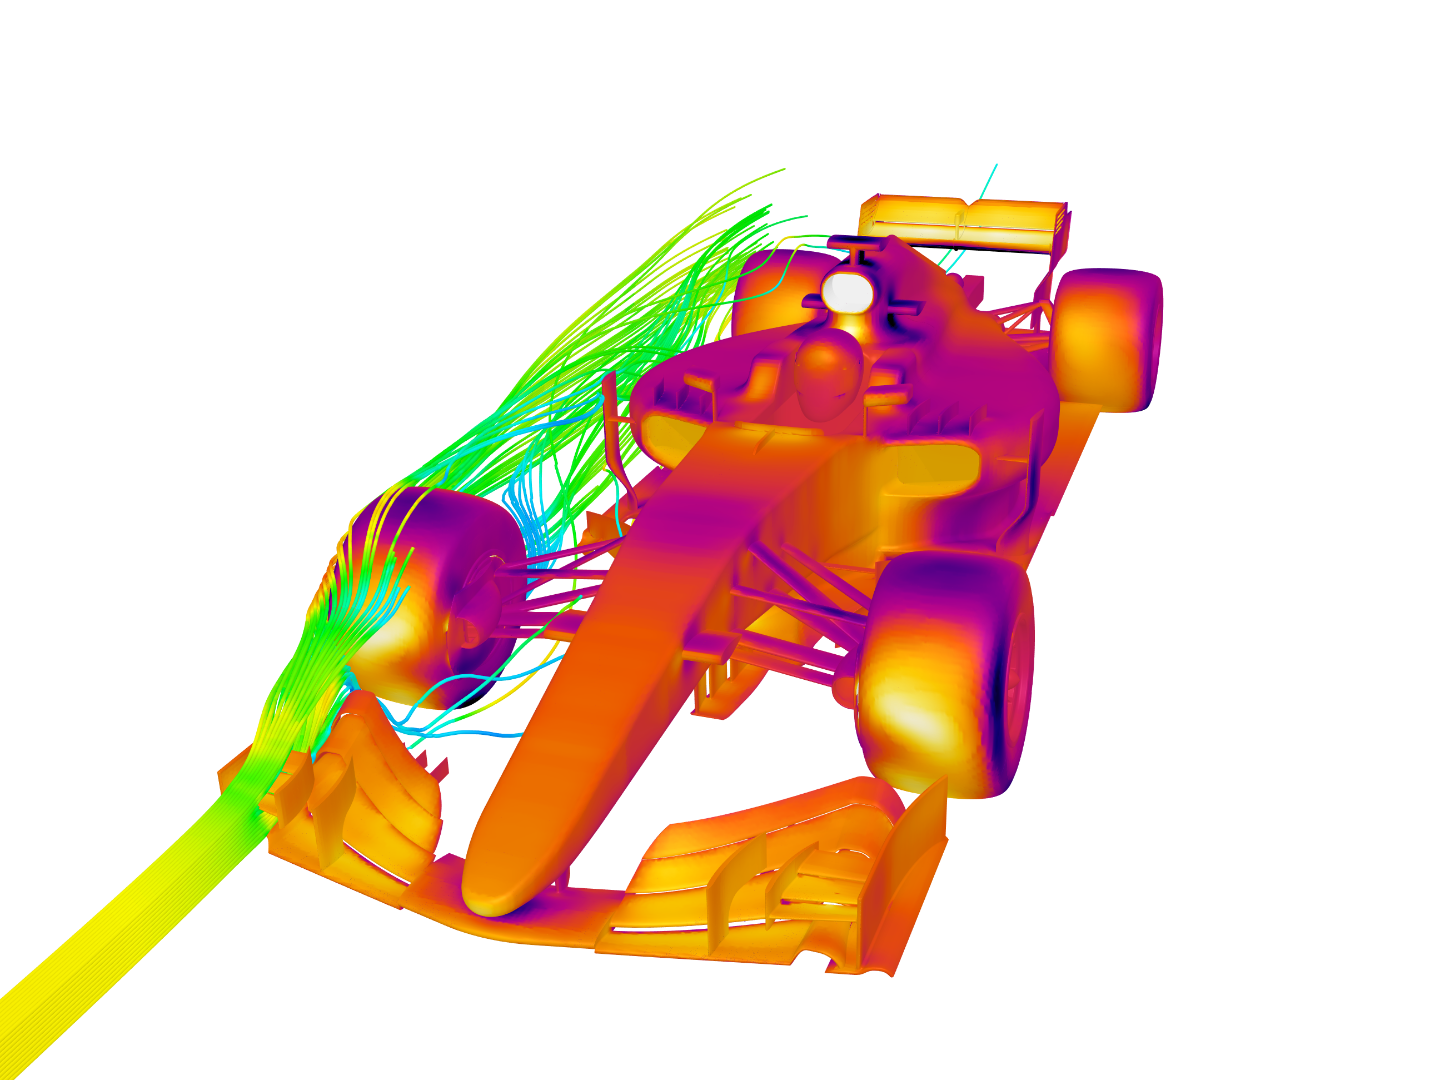 f1 aerodynamic image